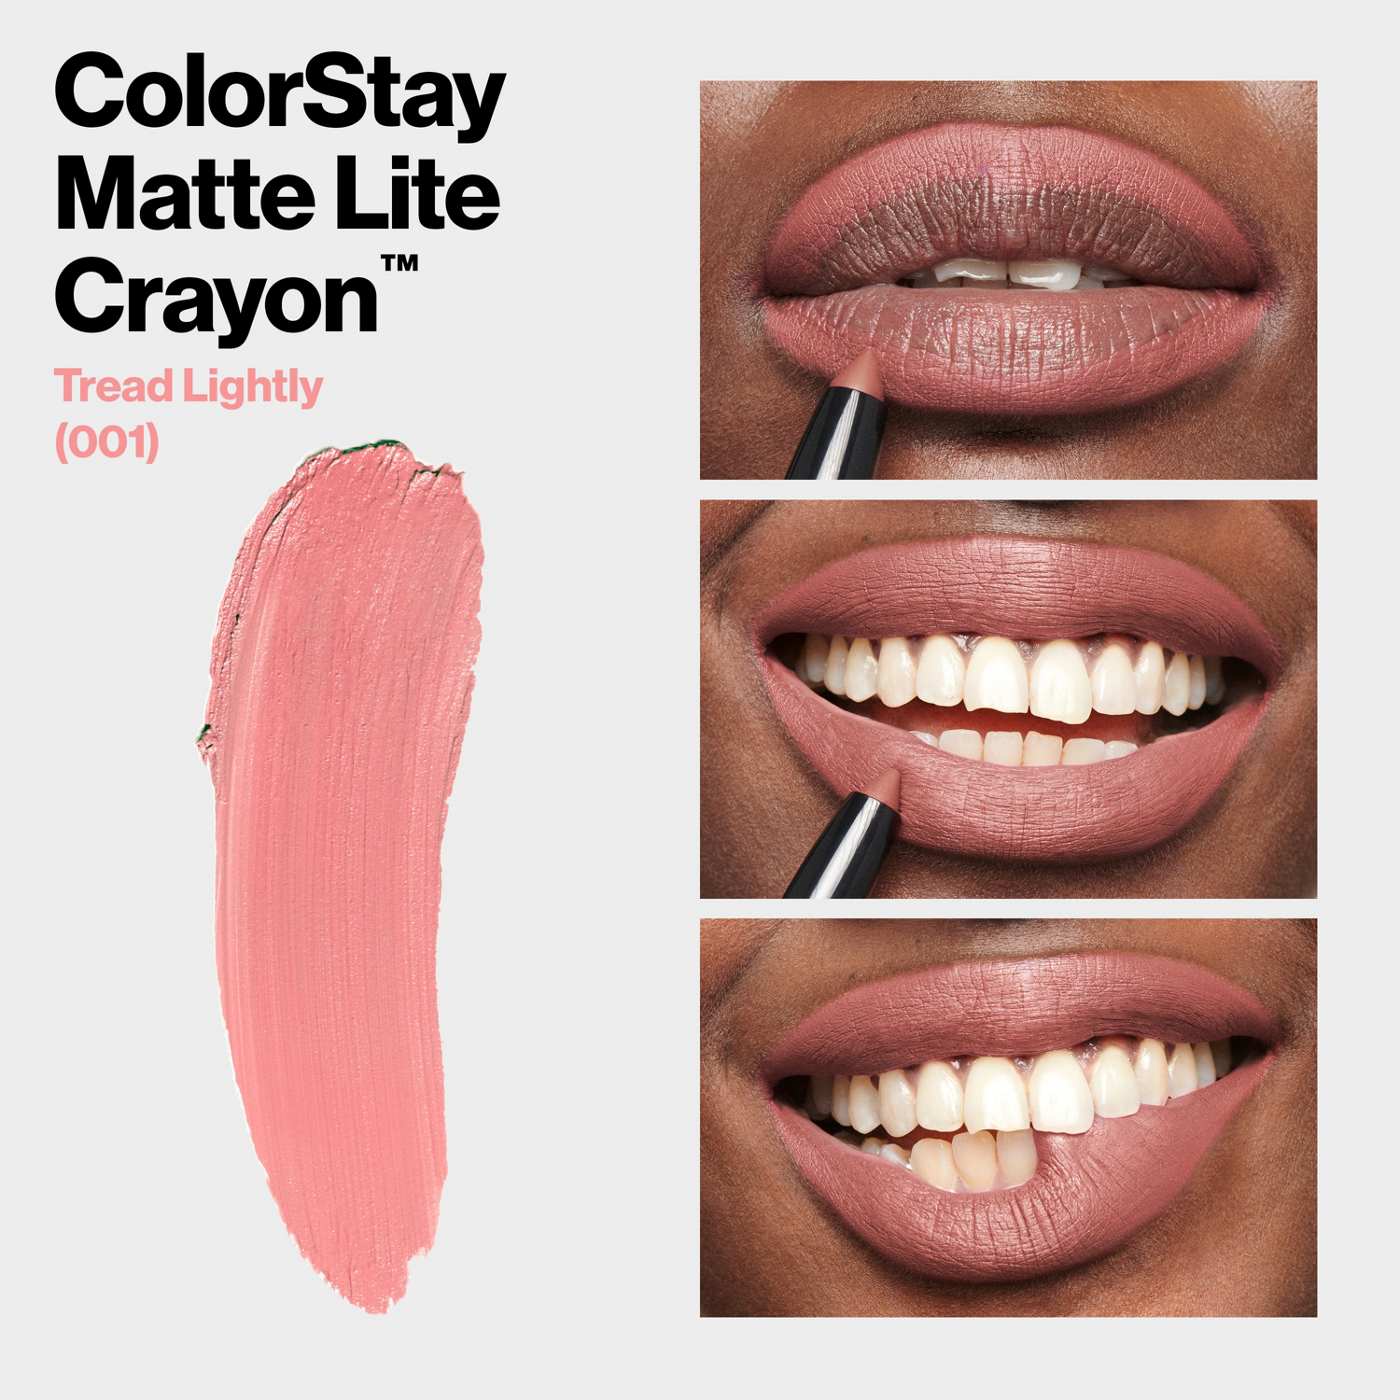 Revlon ColorStay Matte Lite Crayon Lipstick - Tread Lightly; image 4 of 7